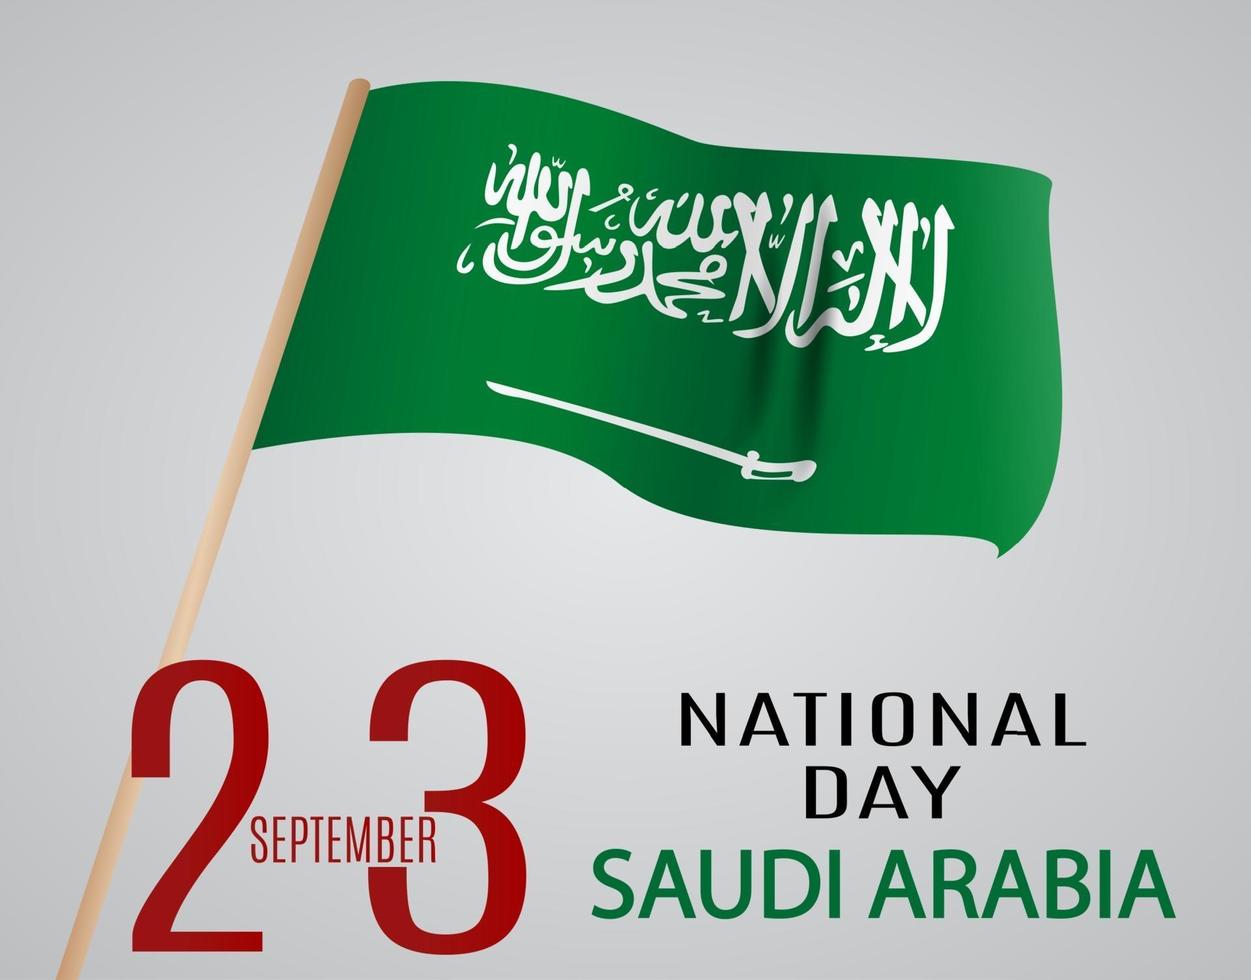 nationale feestdag saoedi-arabië 23 september. onafhankelijkheidsdag vector